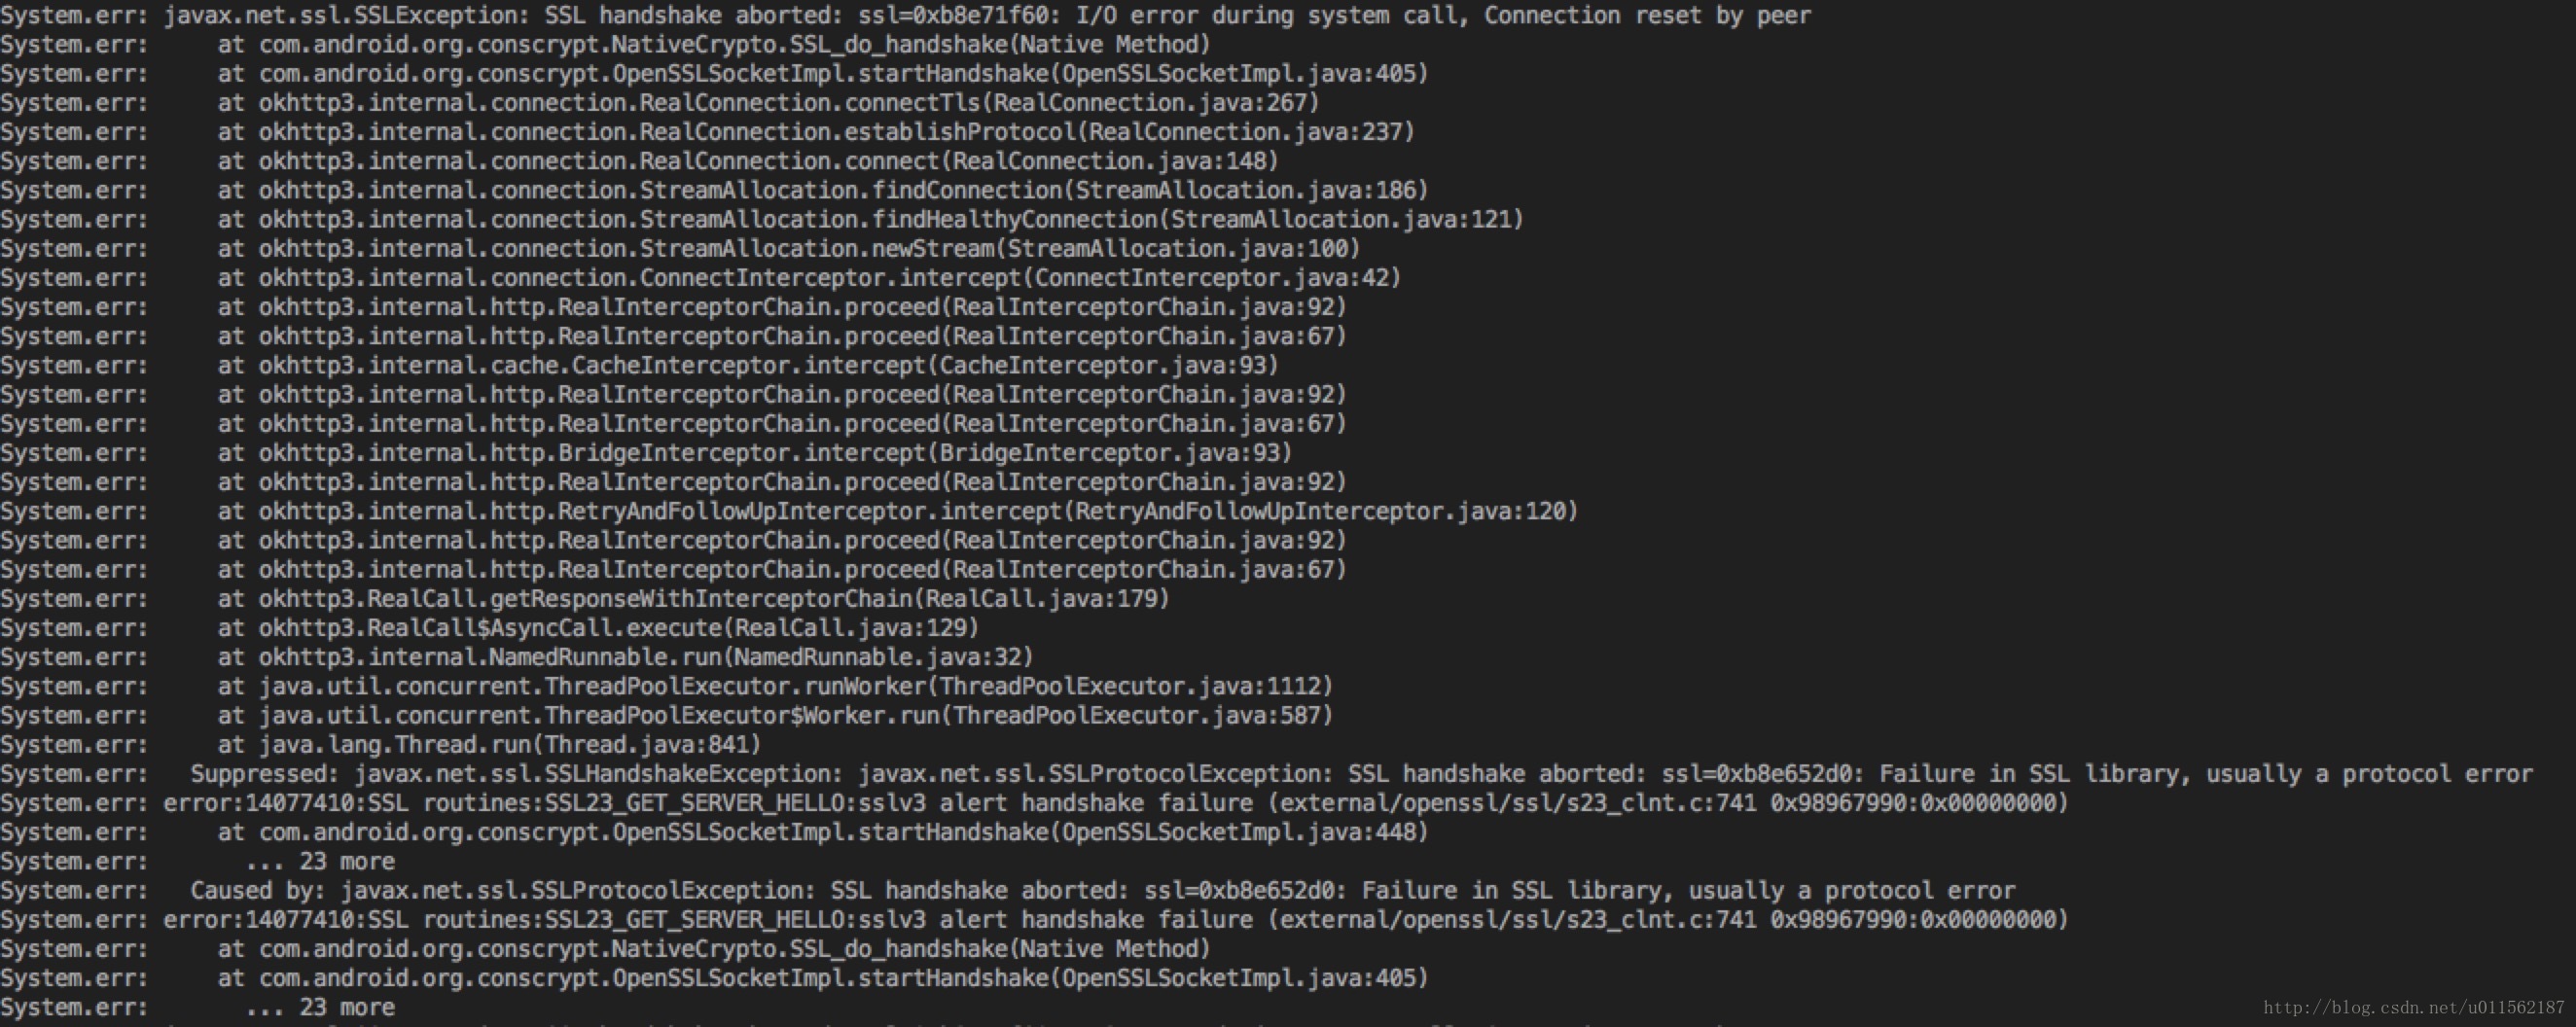 Failed to instantiate. Liquibase. Java config Spring. SSL handshake Aborted. System err java.